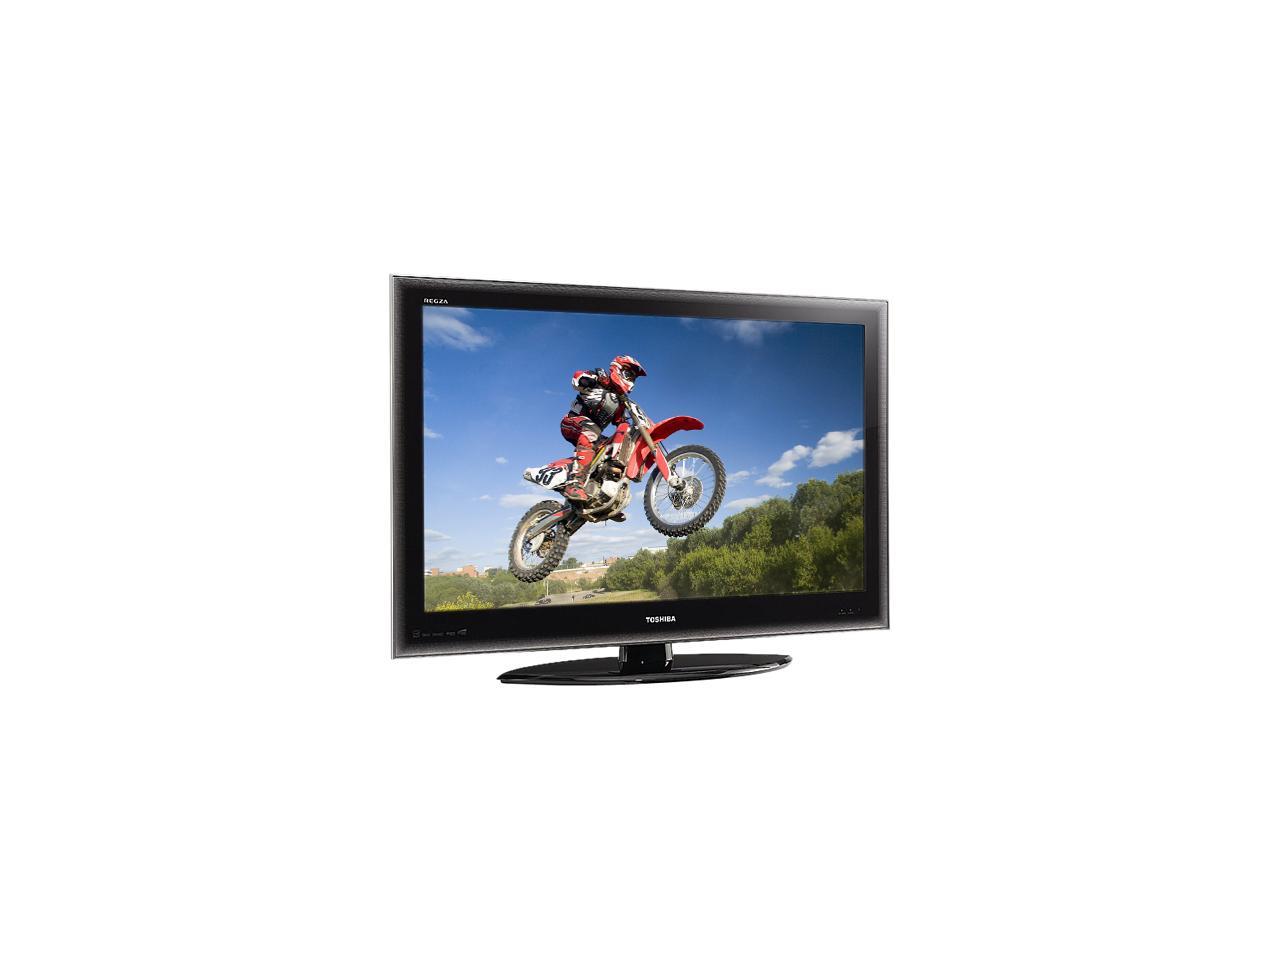 Toshiba REGZA 47" 1080p 240Hz LCD HDTV - Newegg.com